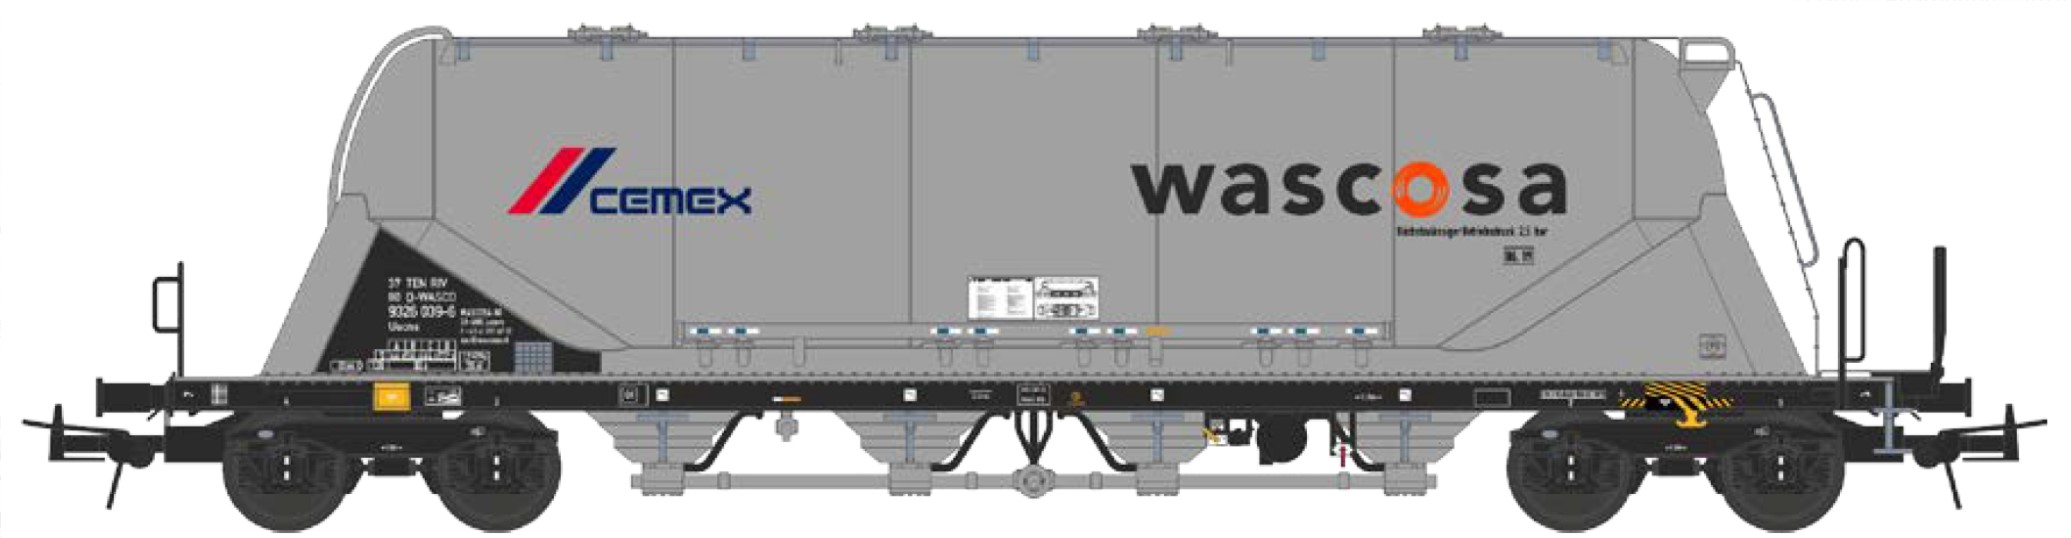 neu Staubsilowagen Uacns 82m³  Wascosa-cemex NME H0 503770 AC OVP 